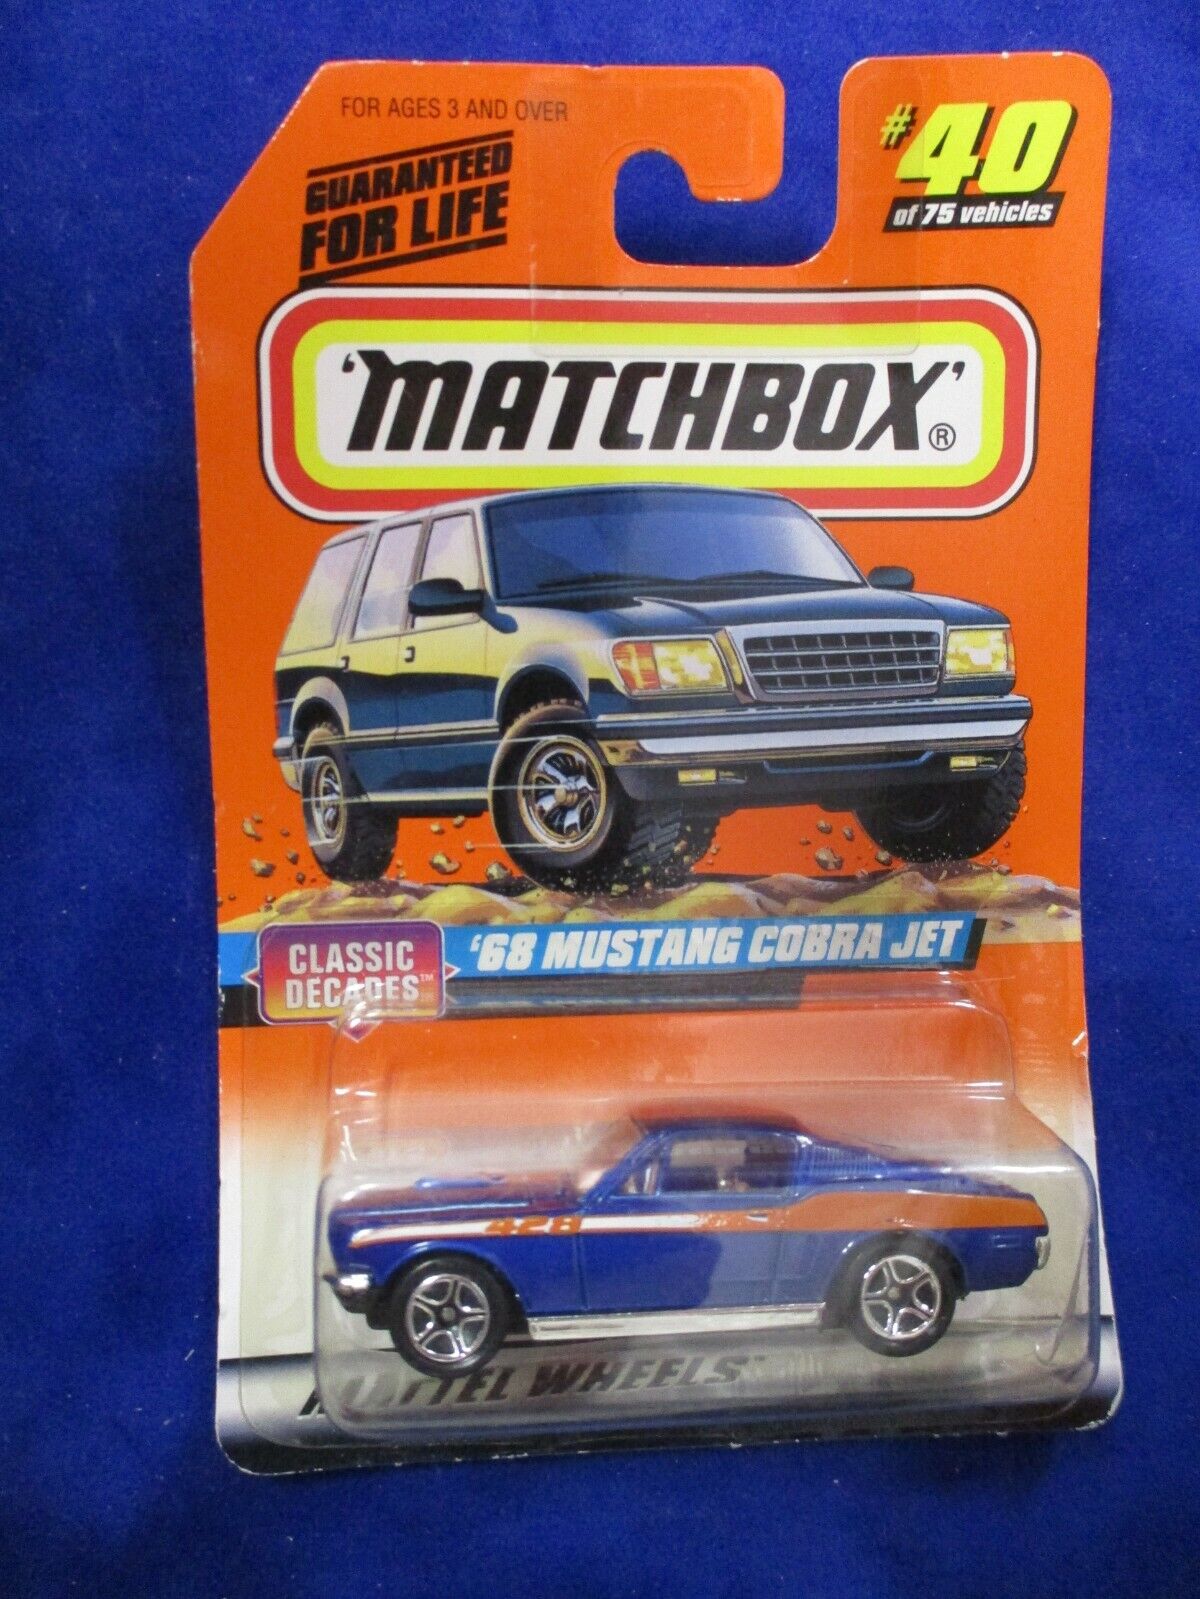 Matchbox Mattel Wheels '68 Mustang Cobra Jet Classic Decades 40/75